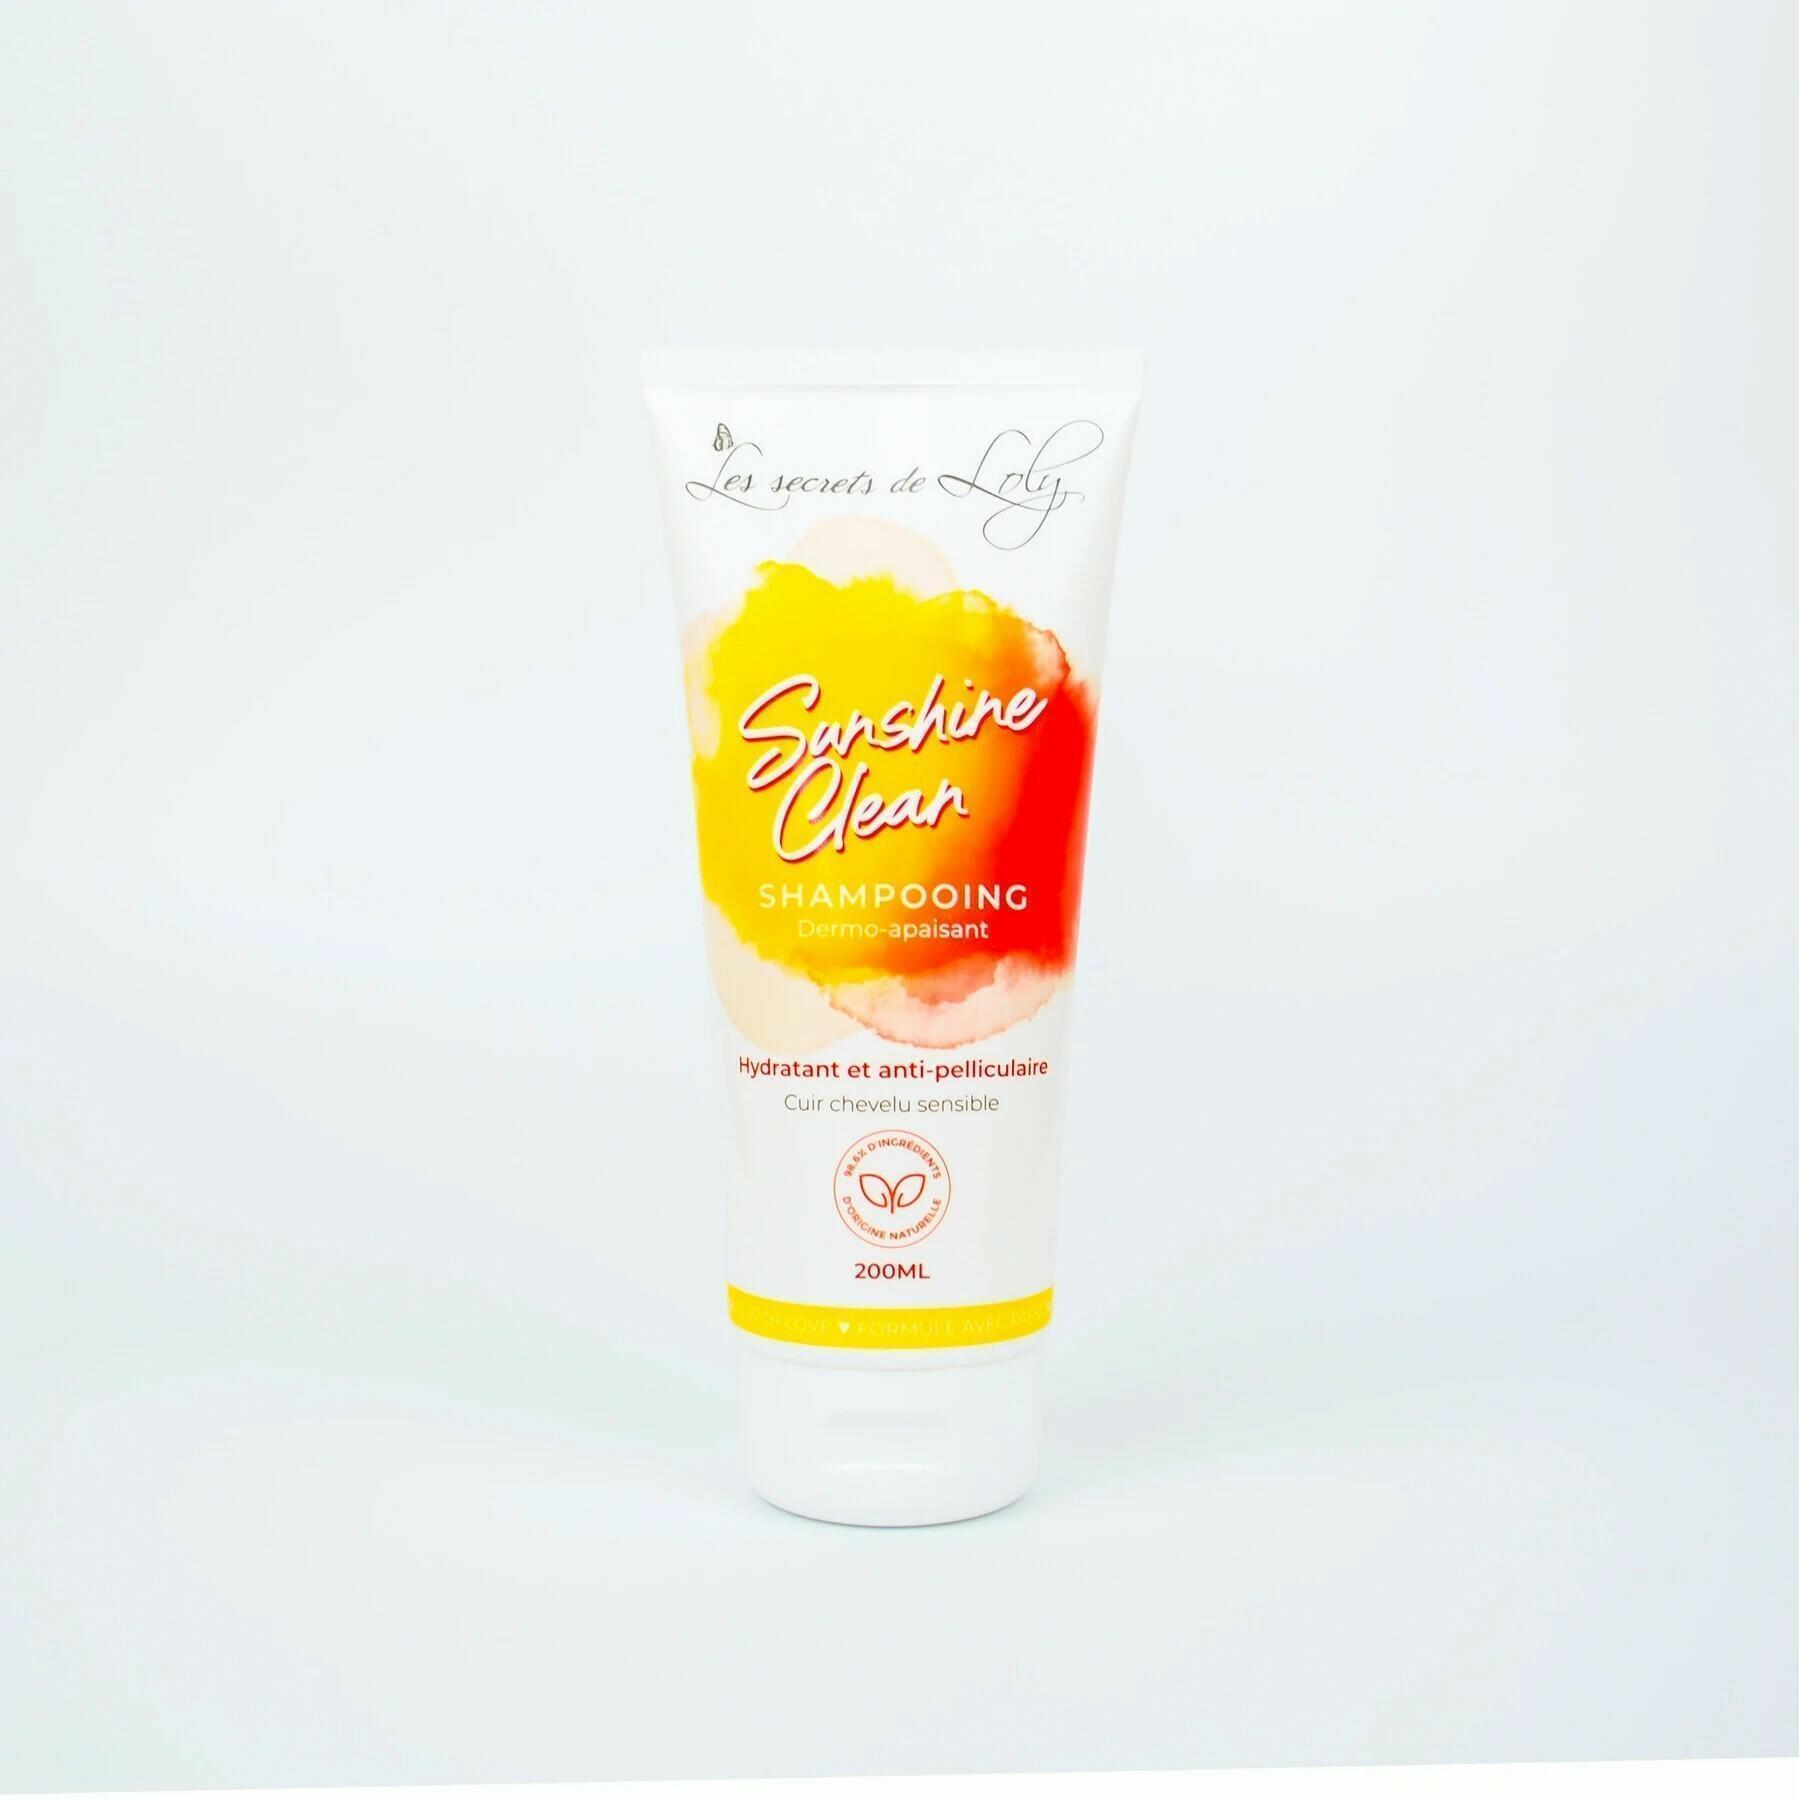 Dermo-soothing shampoo for women Les Secrets de Loly Sunshine Clean